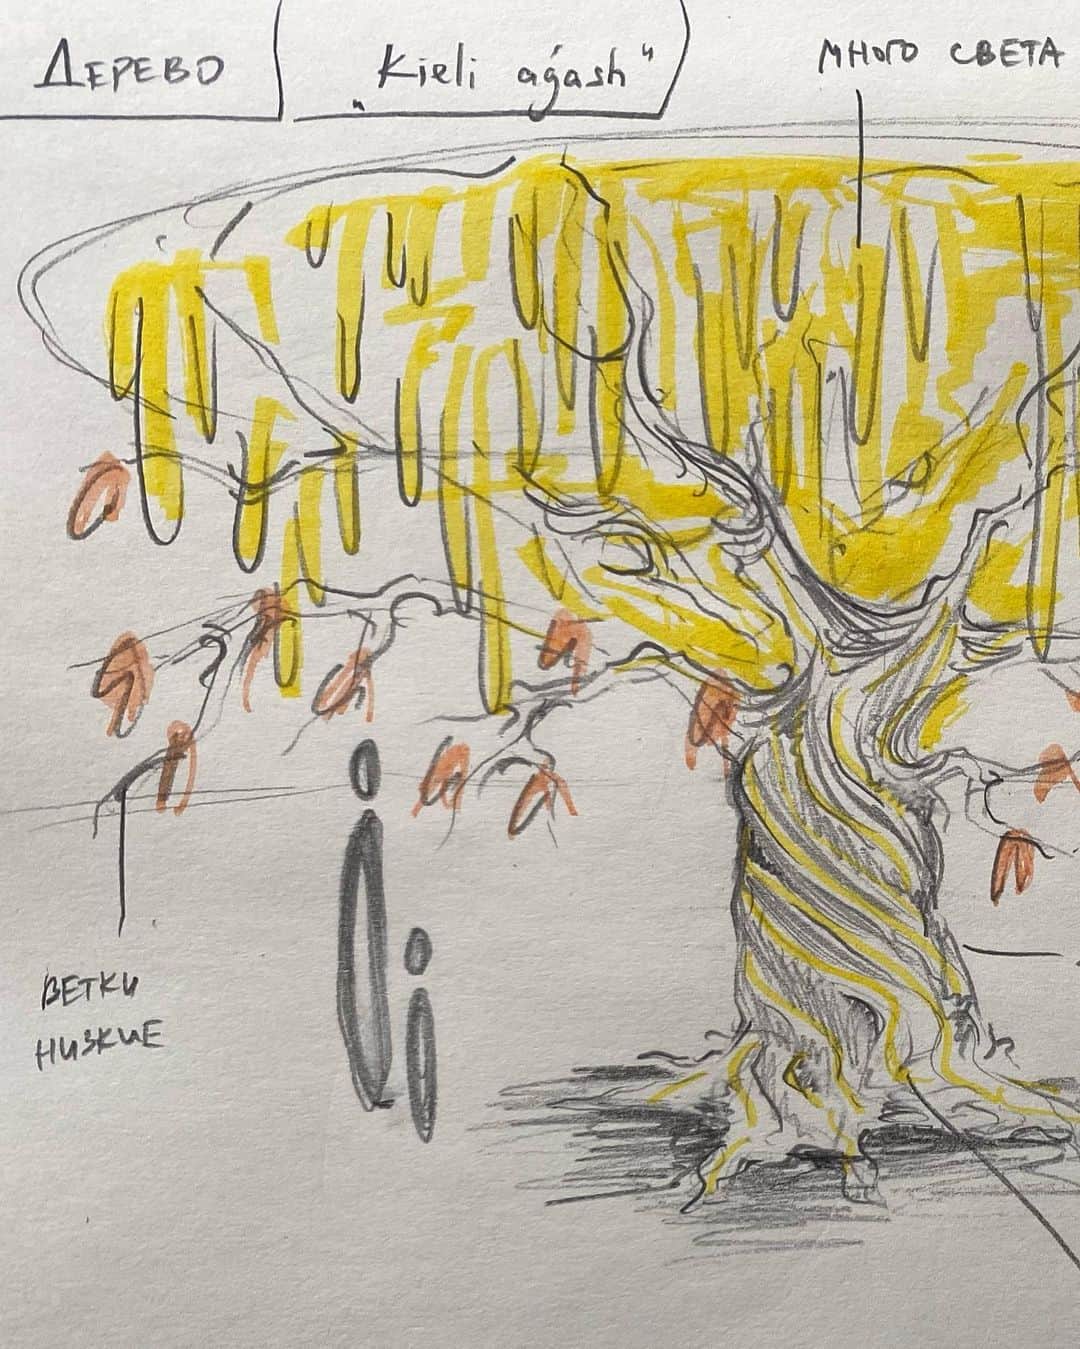 Aya Shalkarさんのインスタグラム写真 - (Aya ShalkarInstagram)「JARYQ: 1/3 - “KIYELI AGASH” 🌳✨(“The sacred tree” - kaz.) is an urban interpretation of an ancient Kazakh tradition. I took the image of the Aulie Agash - the famous 700 years old sacred tree as a prototype for its creation. It grows near the city Zharkent in 350 km from Almaty. Sacred trees play an important role in the spiritual code of Kazakh people. They are believed to be portals for communicating with ancestors. A piece of fabric, that one ties around the branch of a tree, brings prosperity and luck. If you have a special wish for the upcoming year, Kiyeli Agash is ready to make it come true. All you need to do is stand under its bright crown, tie the ribbon on its branch and make a wish.   Kiyeli Agash (“Священное дерево” - каз.) - это городская интерпретация древней традиции: прототипом для ее создания послужил образ священного 700-летнего дерева Аулие агаш, растущего близ города Жаркент, на расстоянии 350 км от Алматы. Священные деревья играют важную роль в духовном коде казахского народа - считается, что это порталы для связи с аруахами. Повязанный на ветку такого дерева кусочек материи приносит благополучие и удачу тому, кто его повязал. Если у вас есть сокровенное желание на предстоящий год, Kiyeli Agash готово исполнить его. Вам нужно лишь встать под его сияющие кроны, завязать на одну из его веток ленту и загадать желание.   Kiyeli Agash - көне салт-жораның қалалық интерпретациясы. Бұл ағаштың түпүлгісі Алматыдан 350 шақырым жердегі Жаркент қаласының жанында тамыр жайған жеті ғасырлық Әулие ағашы. Киелі ағаштар қазақ халқының рухани кодында маңызды рөл атқарады. Ағашқа ақ мата байлаған адамға құт, береке, жақсылық қонады деген сенім бар. Егер сіздің көптен аңсаған арманыңыз болса, Киелі Ағаш сол арманыңызды орындай алады. Сіз тек оның астына келіп, бір бұтағына мата байлап, тілегіңізді тілесеңіз болғаны.  ✨」12月29日 22時21分 - aya_shalkar